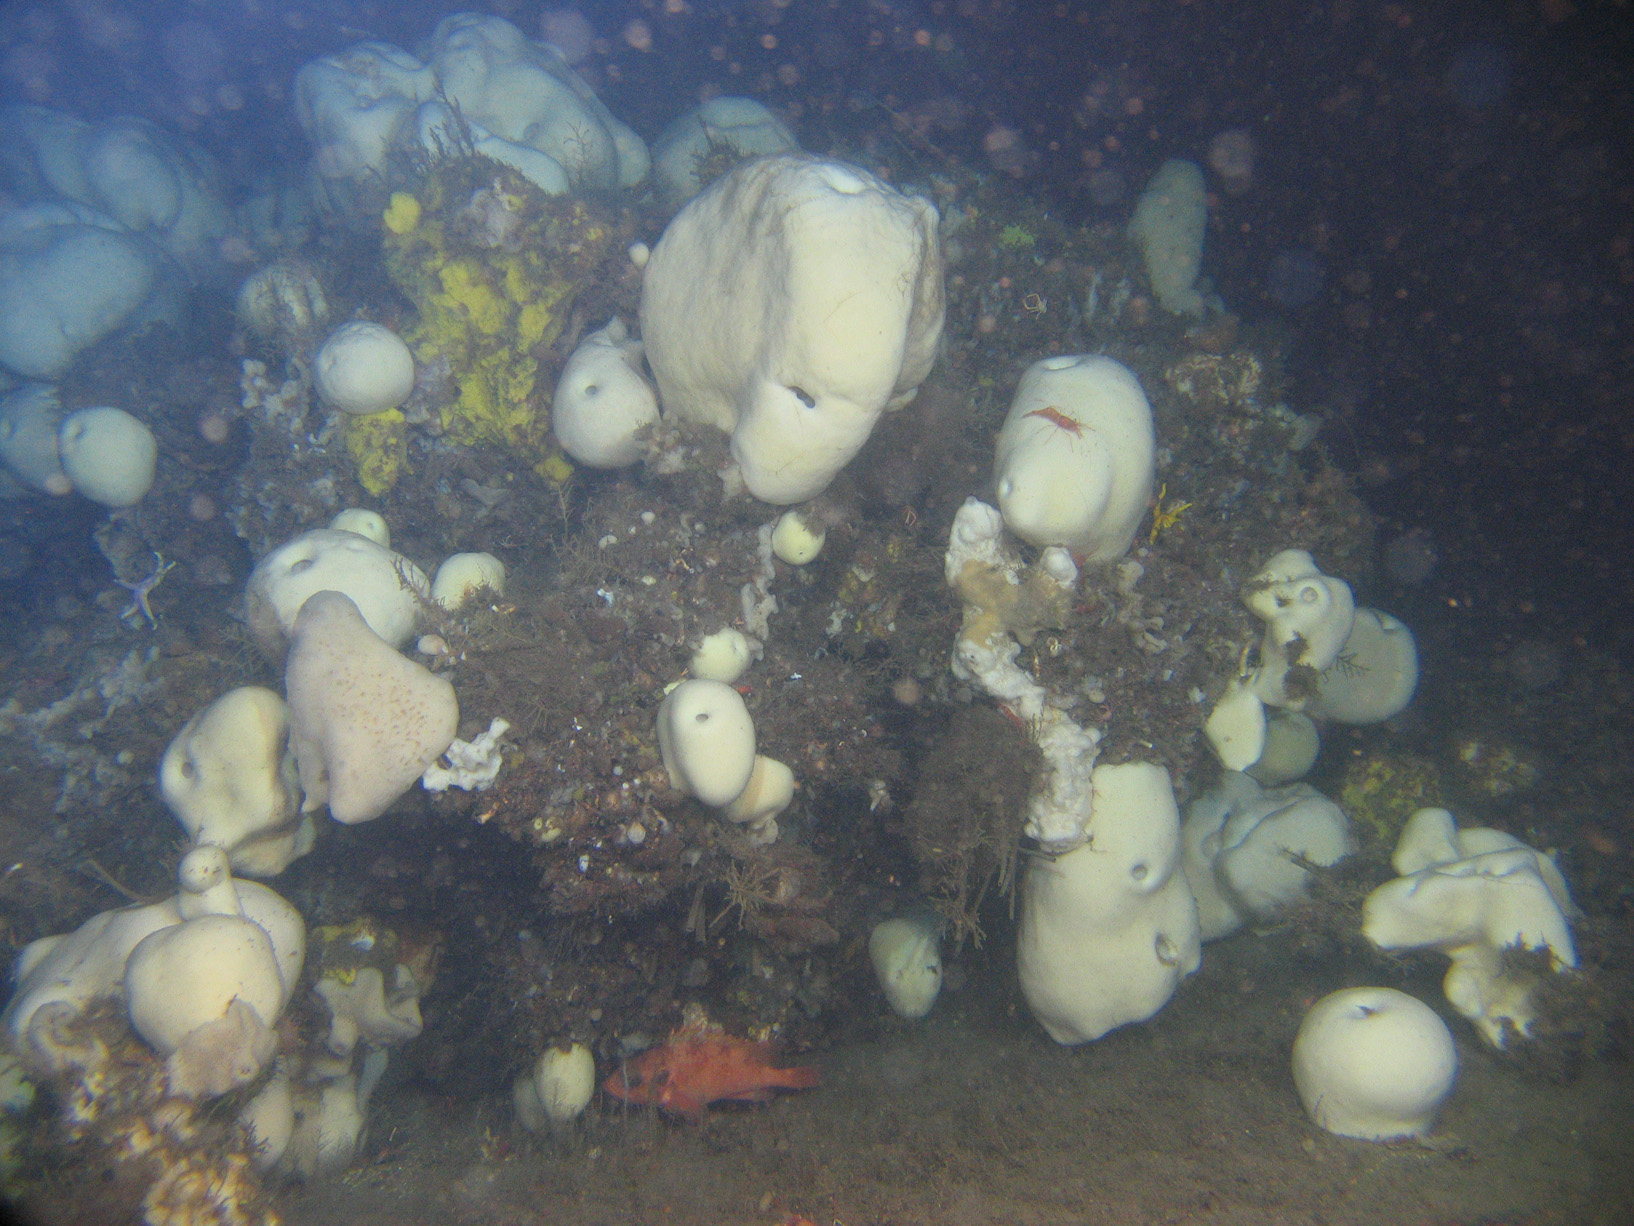 Picture of Geodia barretti on the seafloor, underwater. 